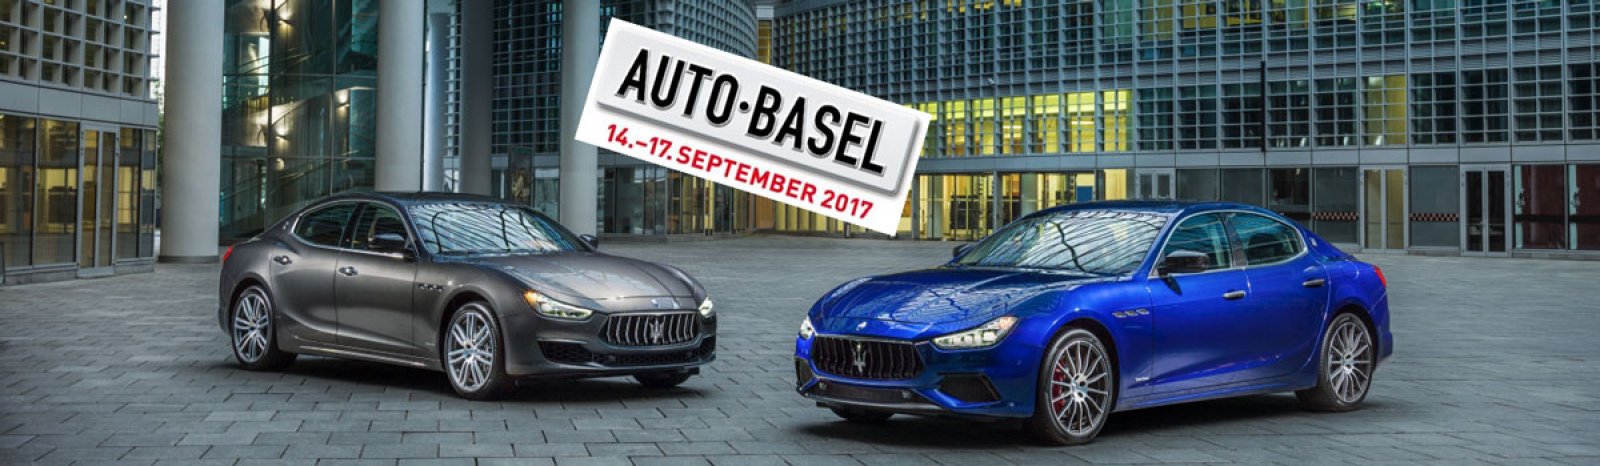 MASERATI Ghibli exklusiv - Auto Basel 2017